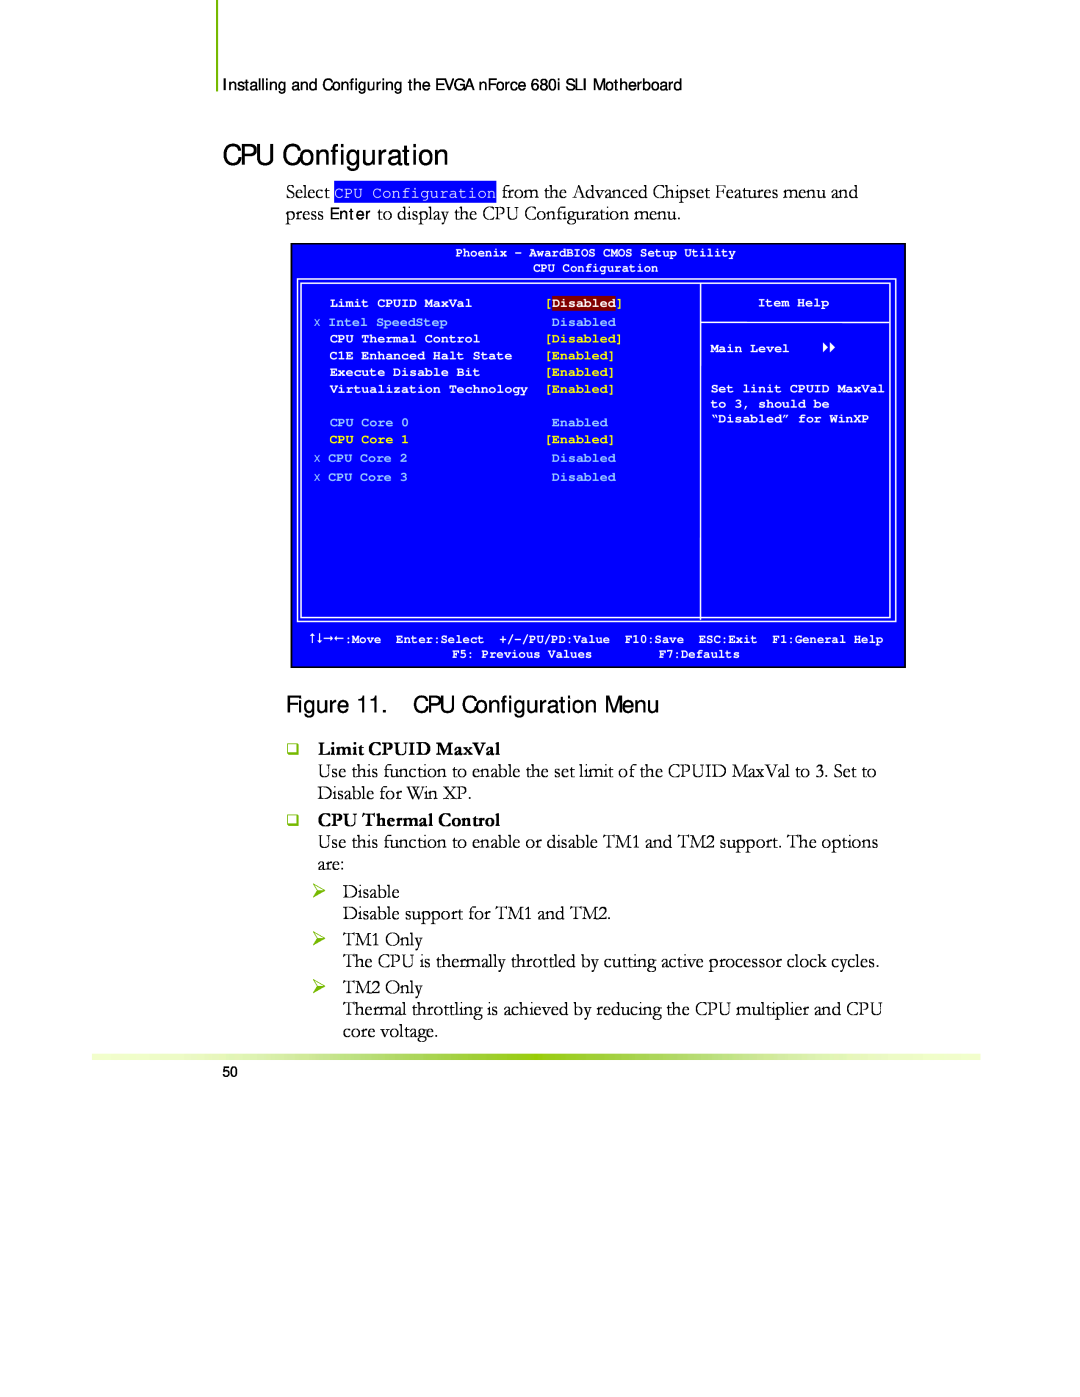 EVGA 122-CK-NF68-XX manual CPU Configuration Menu, ‰ Limit CPUID MaxVal, ‰ CPU Thermal Control 